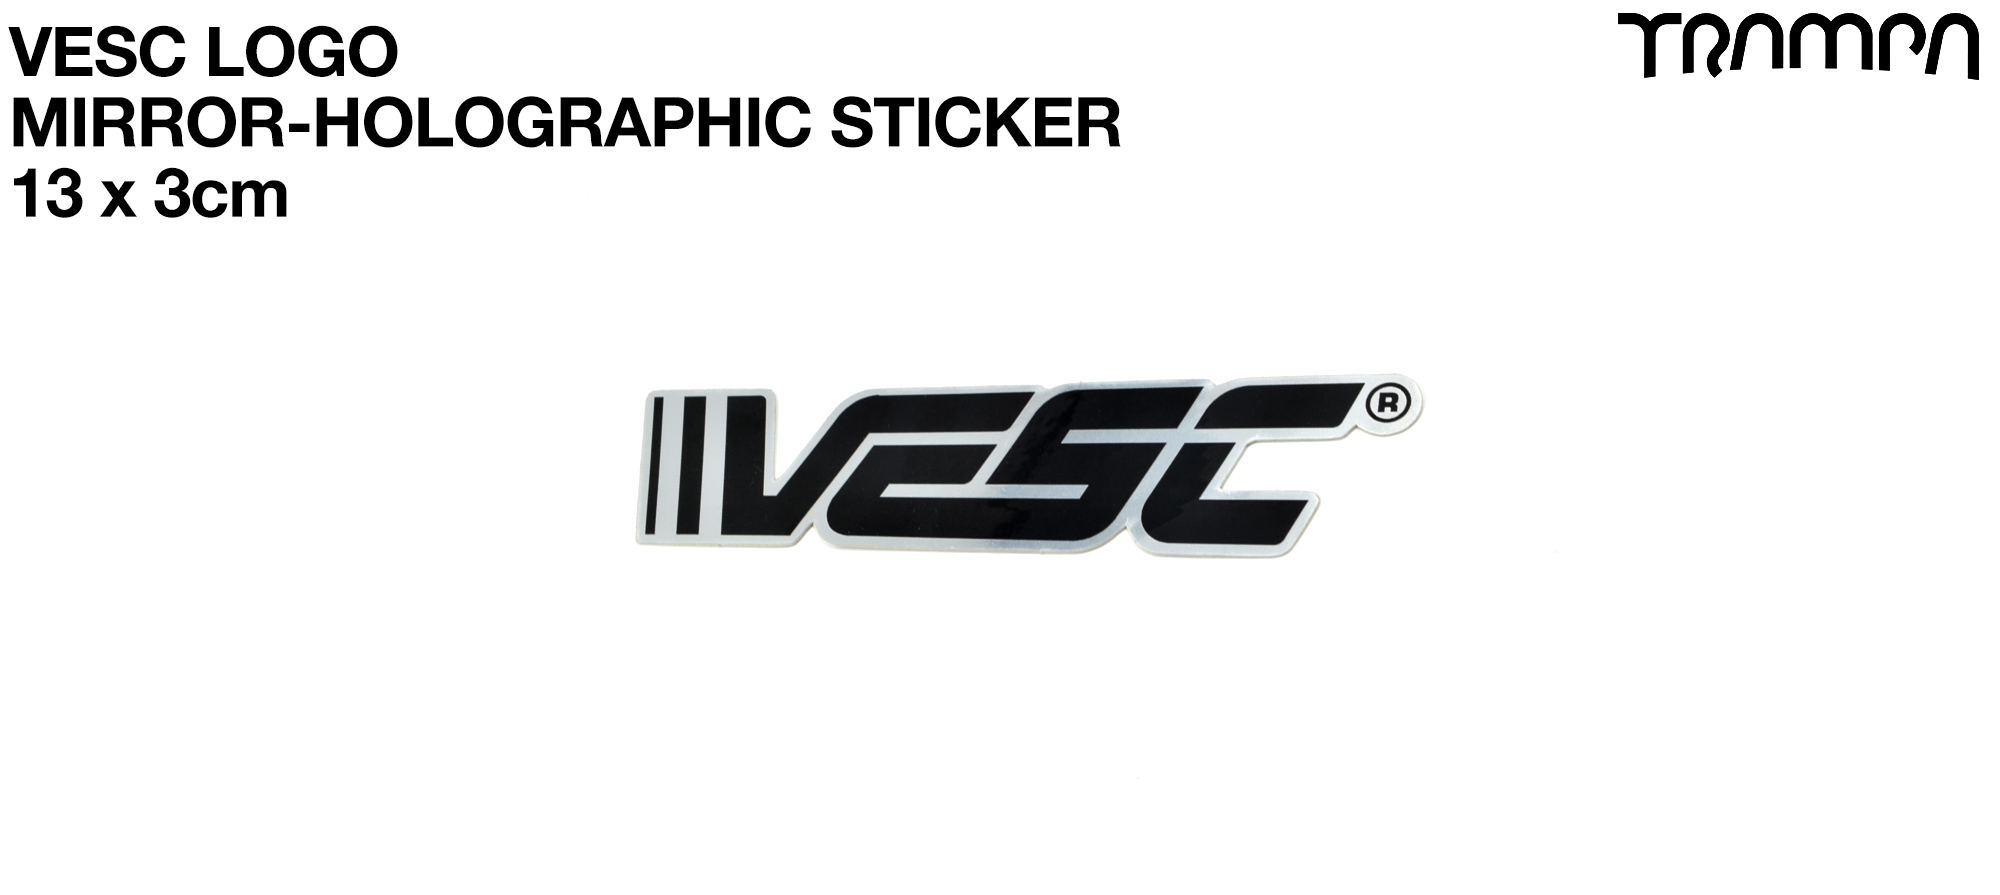 Please give me 2x V2 Holographic VESC Sticker (+£2)